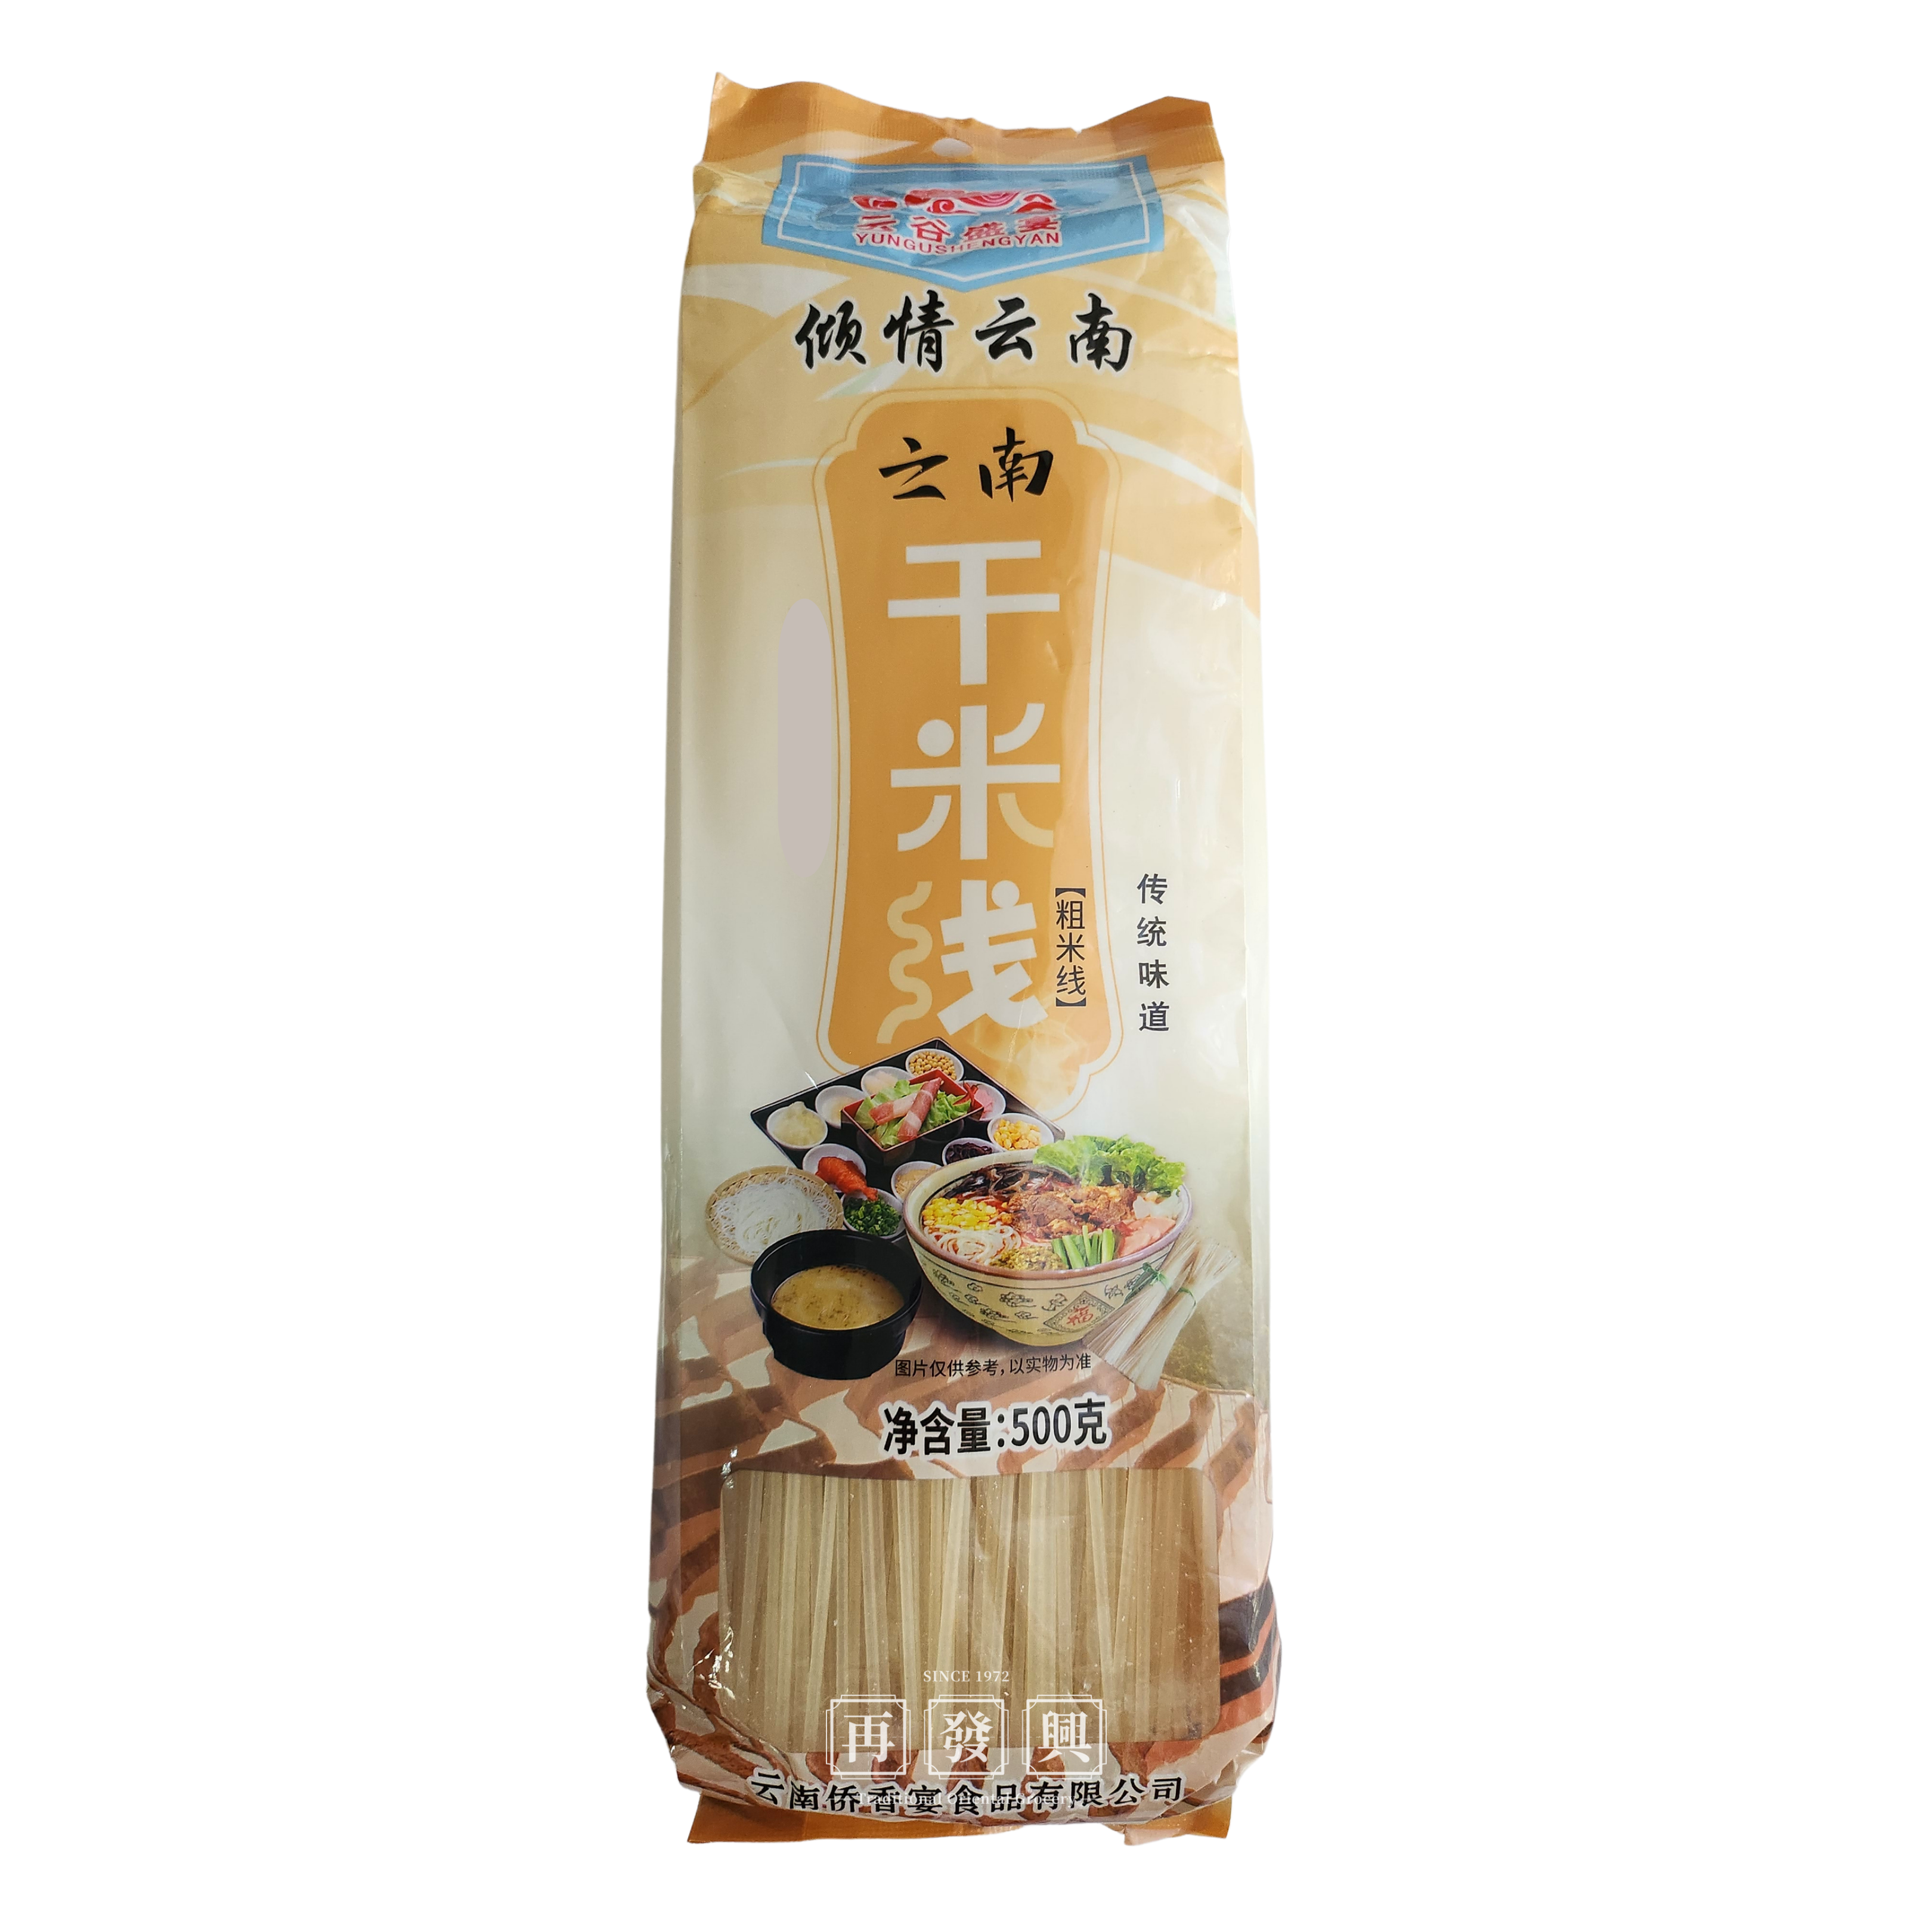 Yunnan Dry Rice Noodle (Thick) 云南过桥干米线(粗米线) 500g